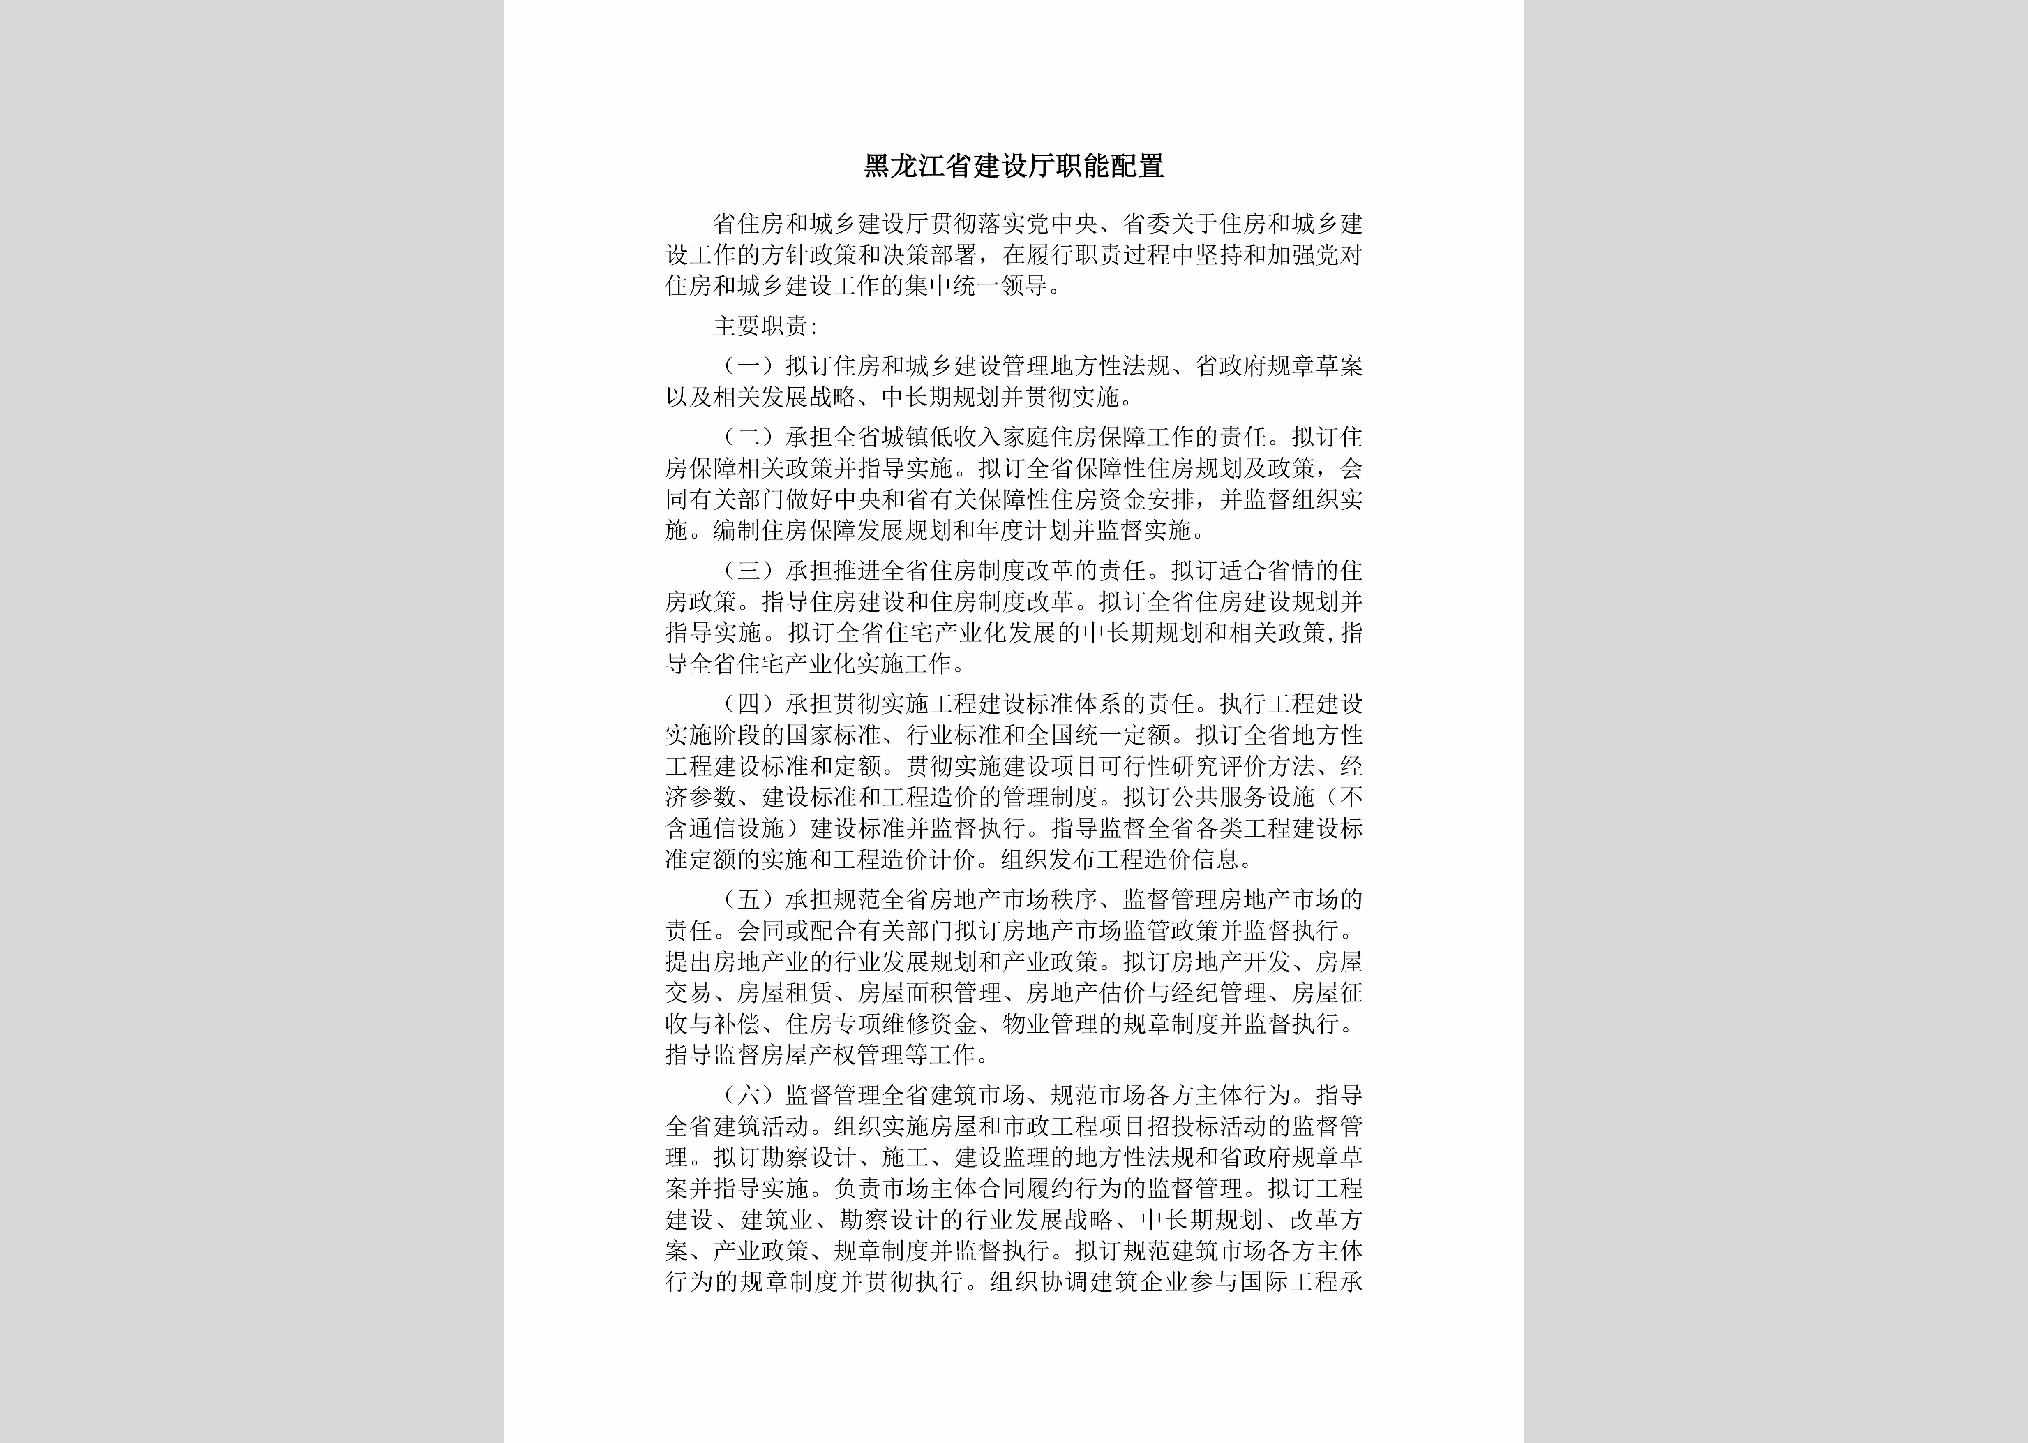 HLJ-SJSTZNPZ-2019：黑龙江省建设厅职能配置